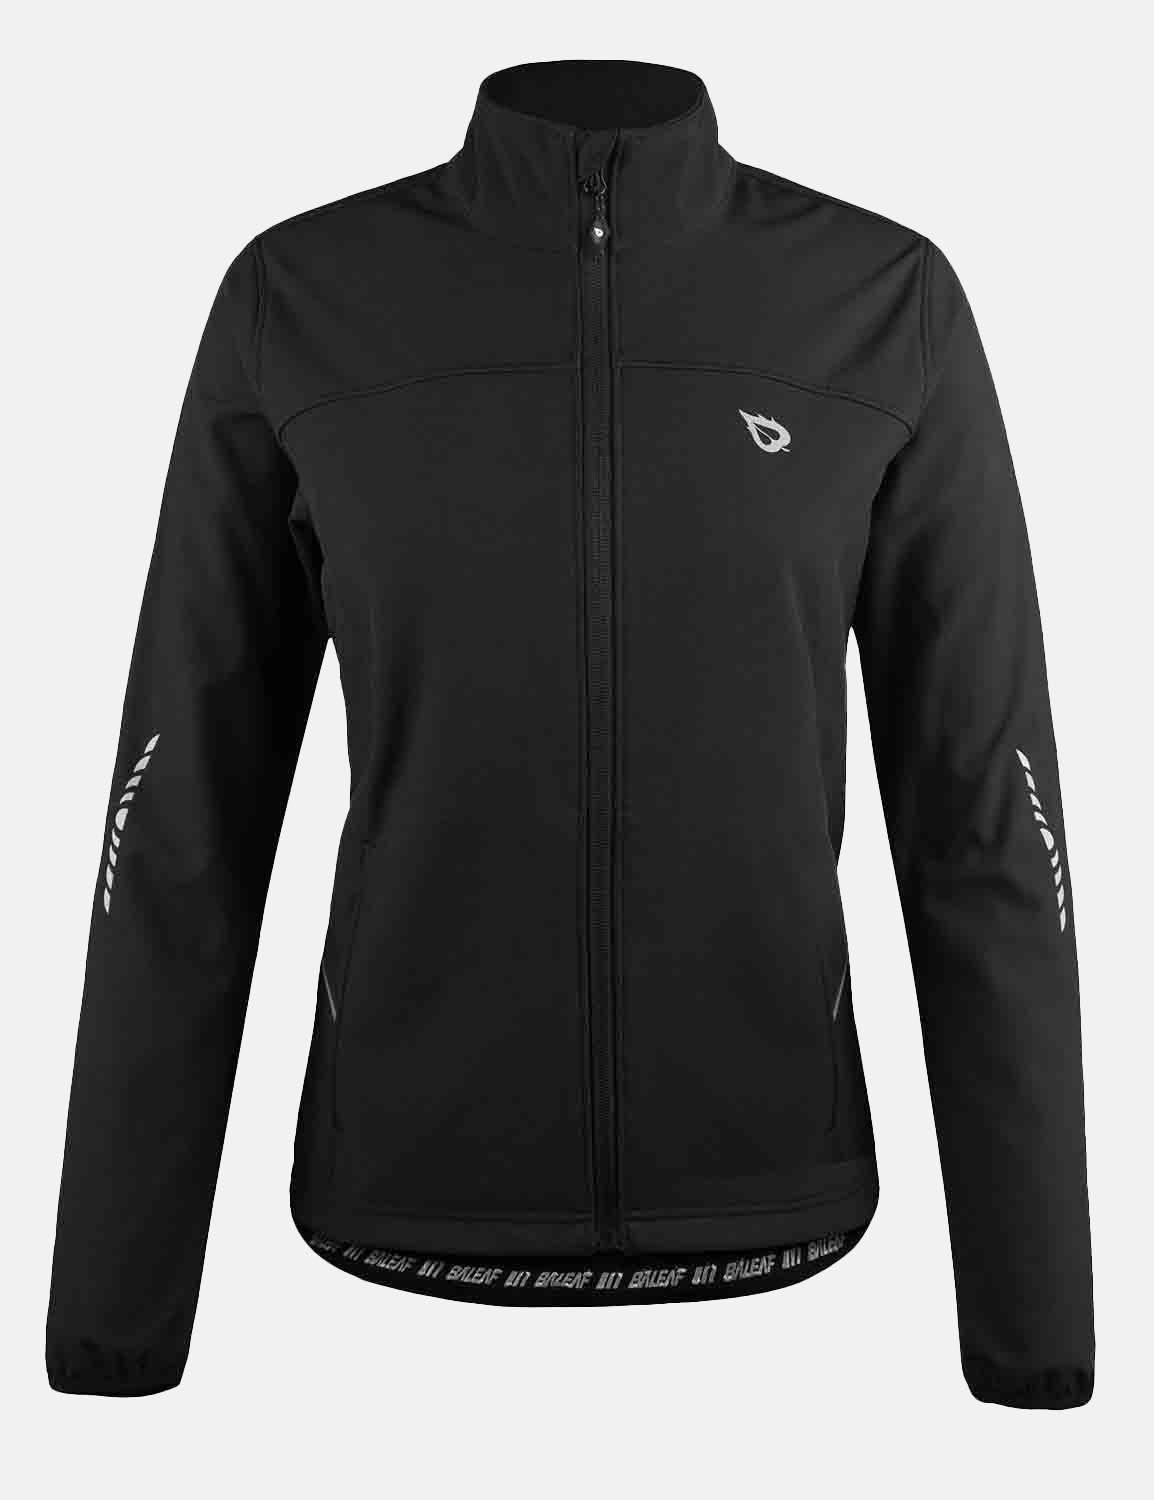 Baleaf Women's Thermal Long-Sleeved Cycling Jacket – Baleaf Sports